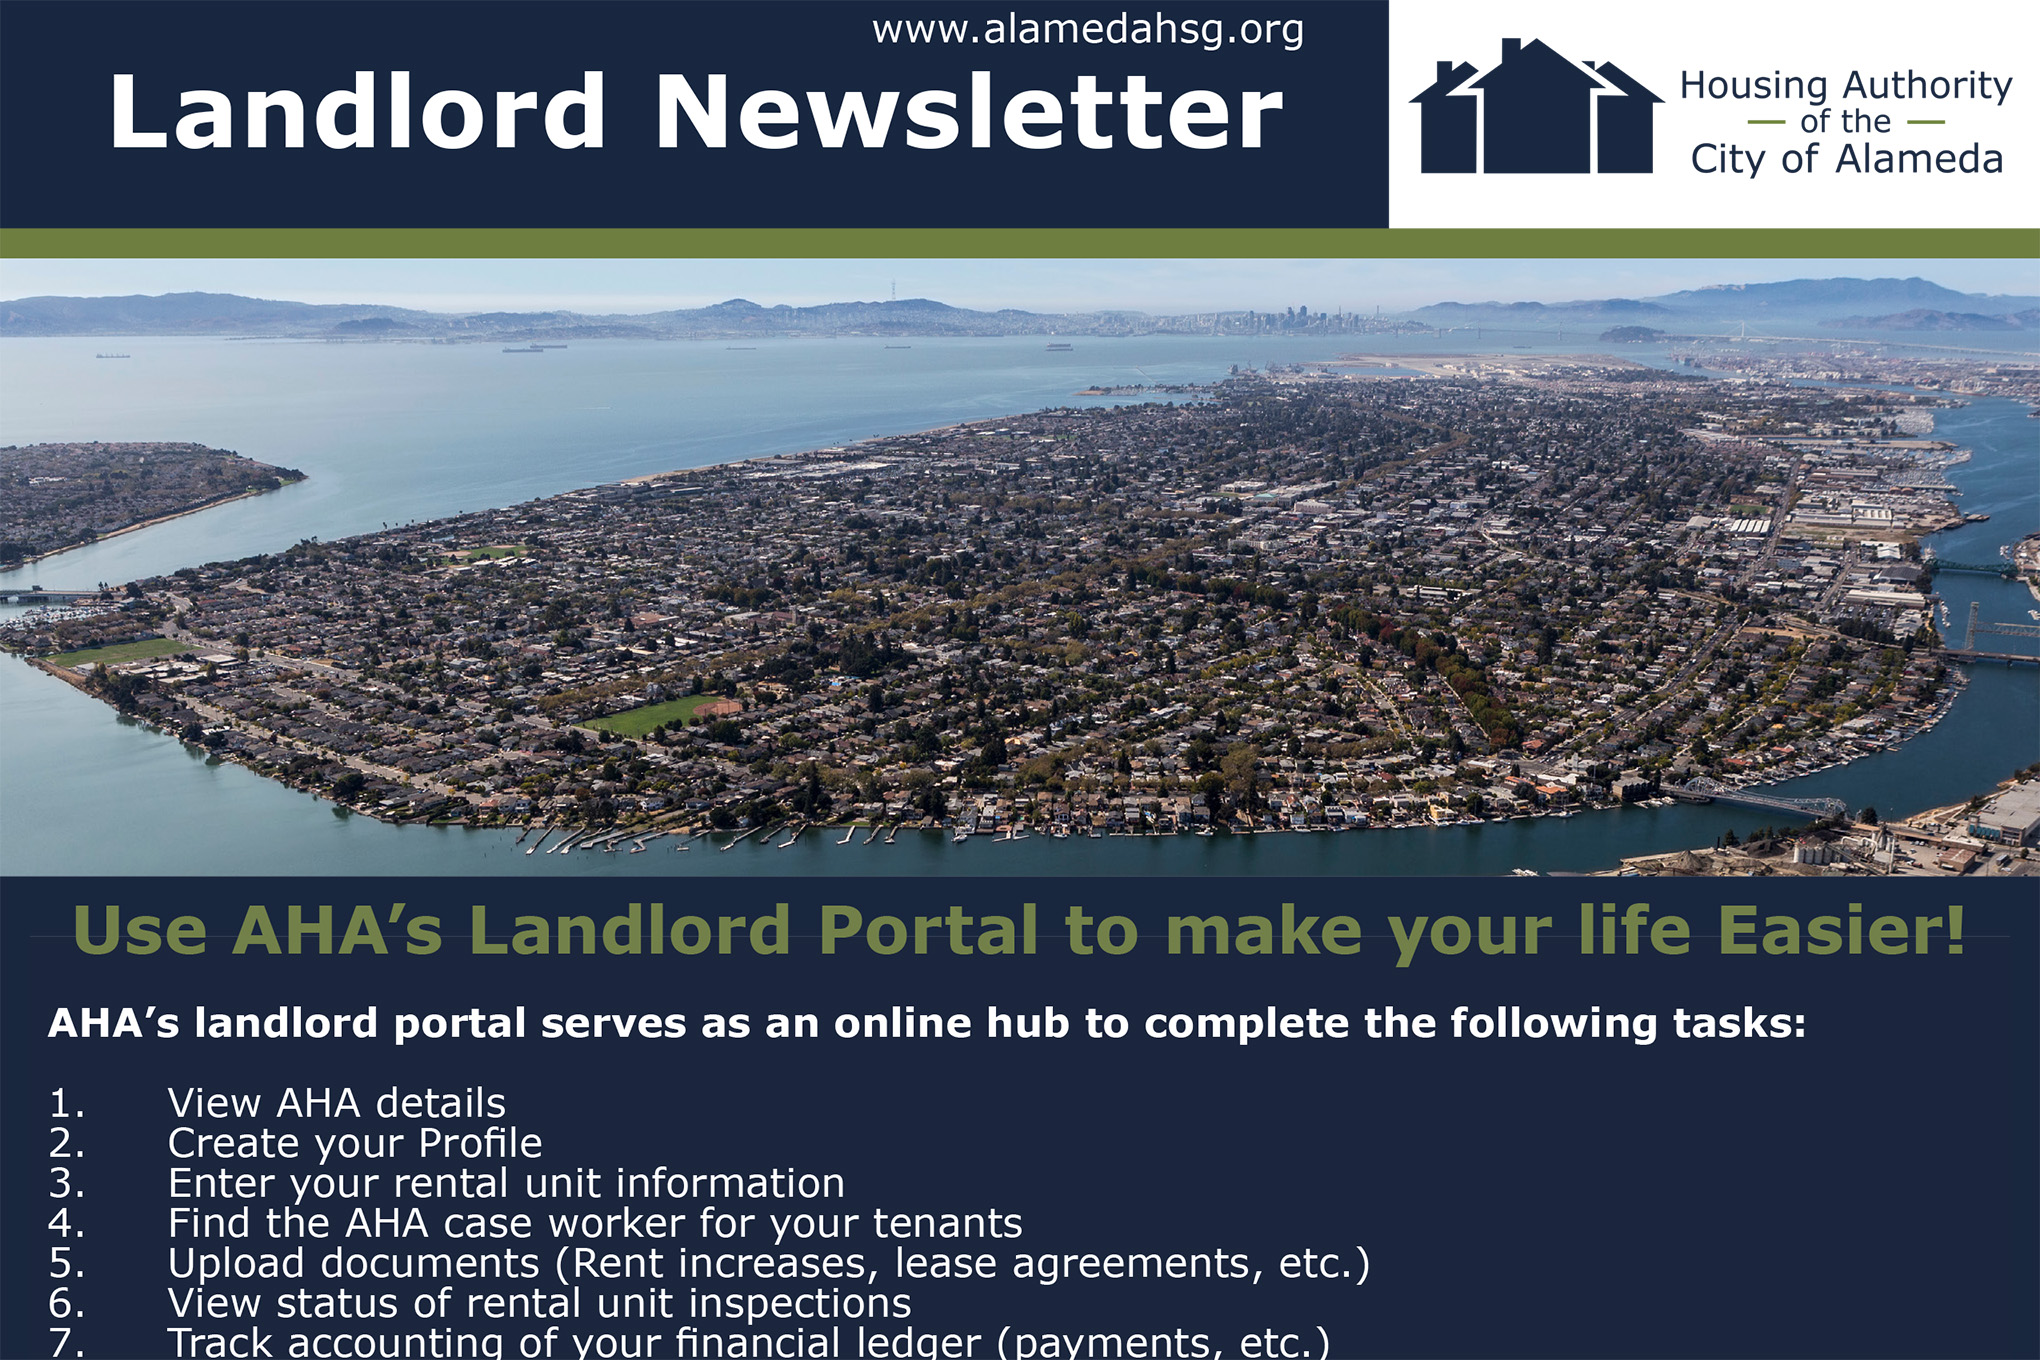 March 2022: Landlord Newsletter